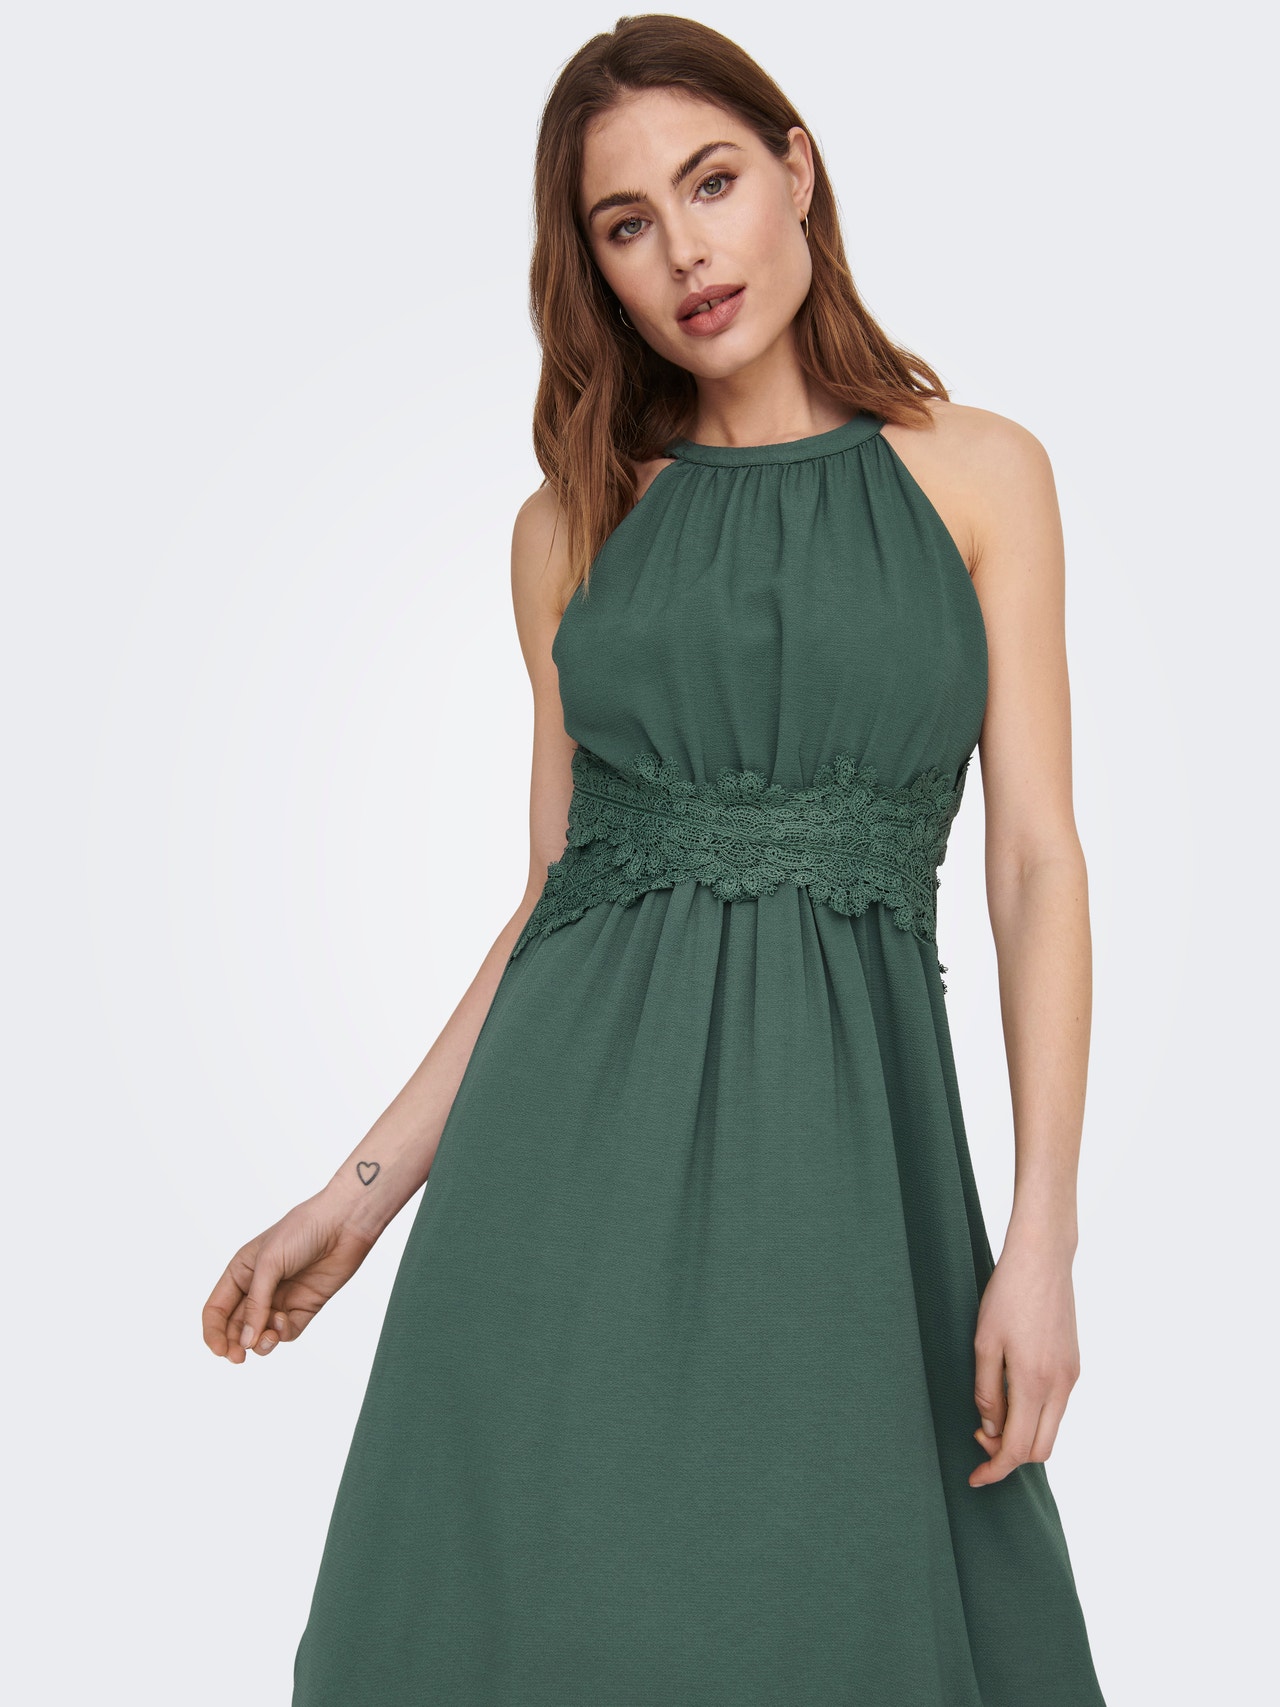 ONLY Maxi Halterneck Dress -Balsam Green - 15304689